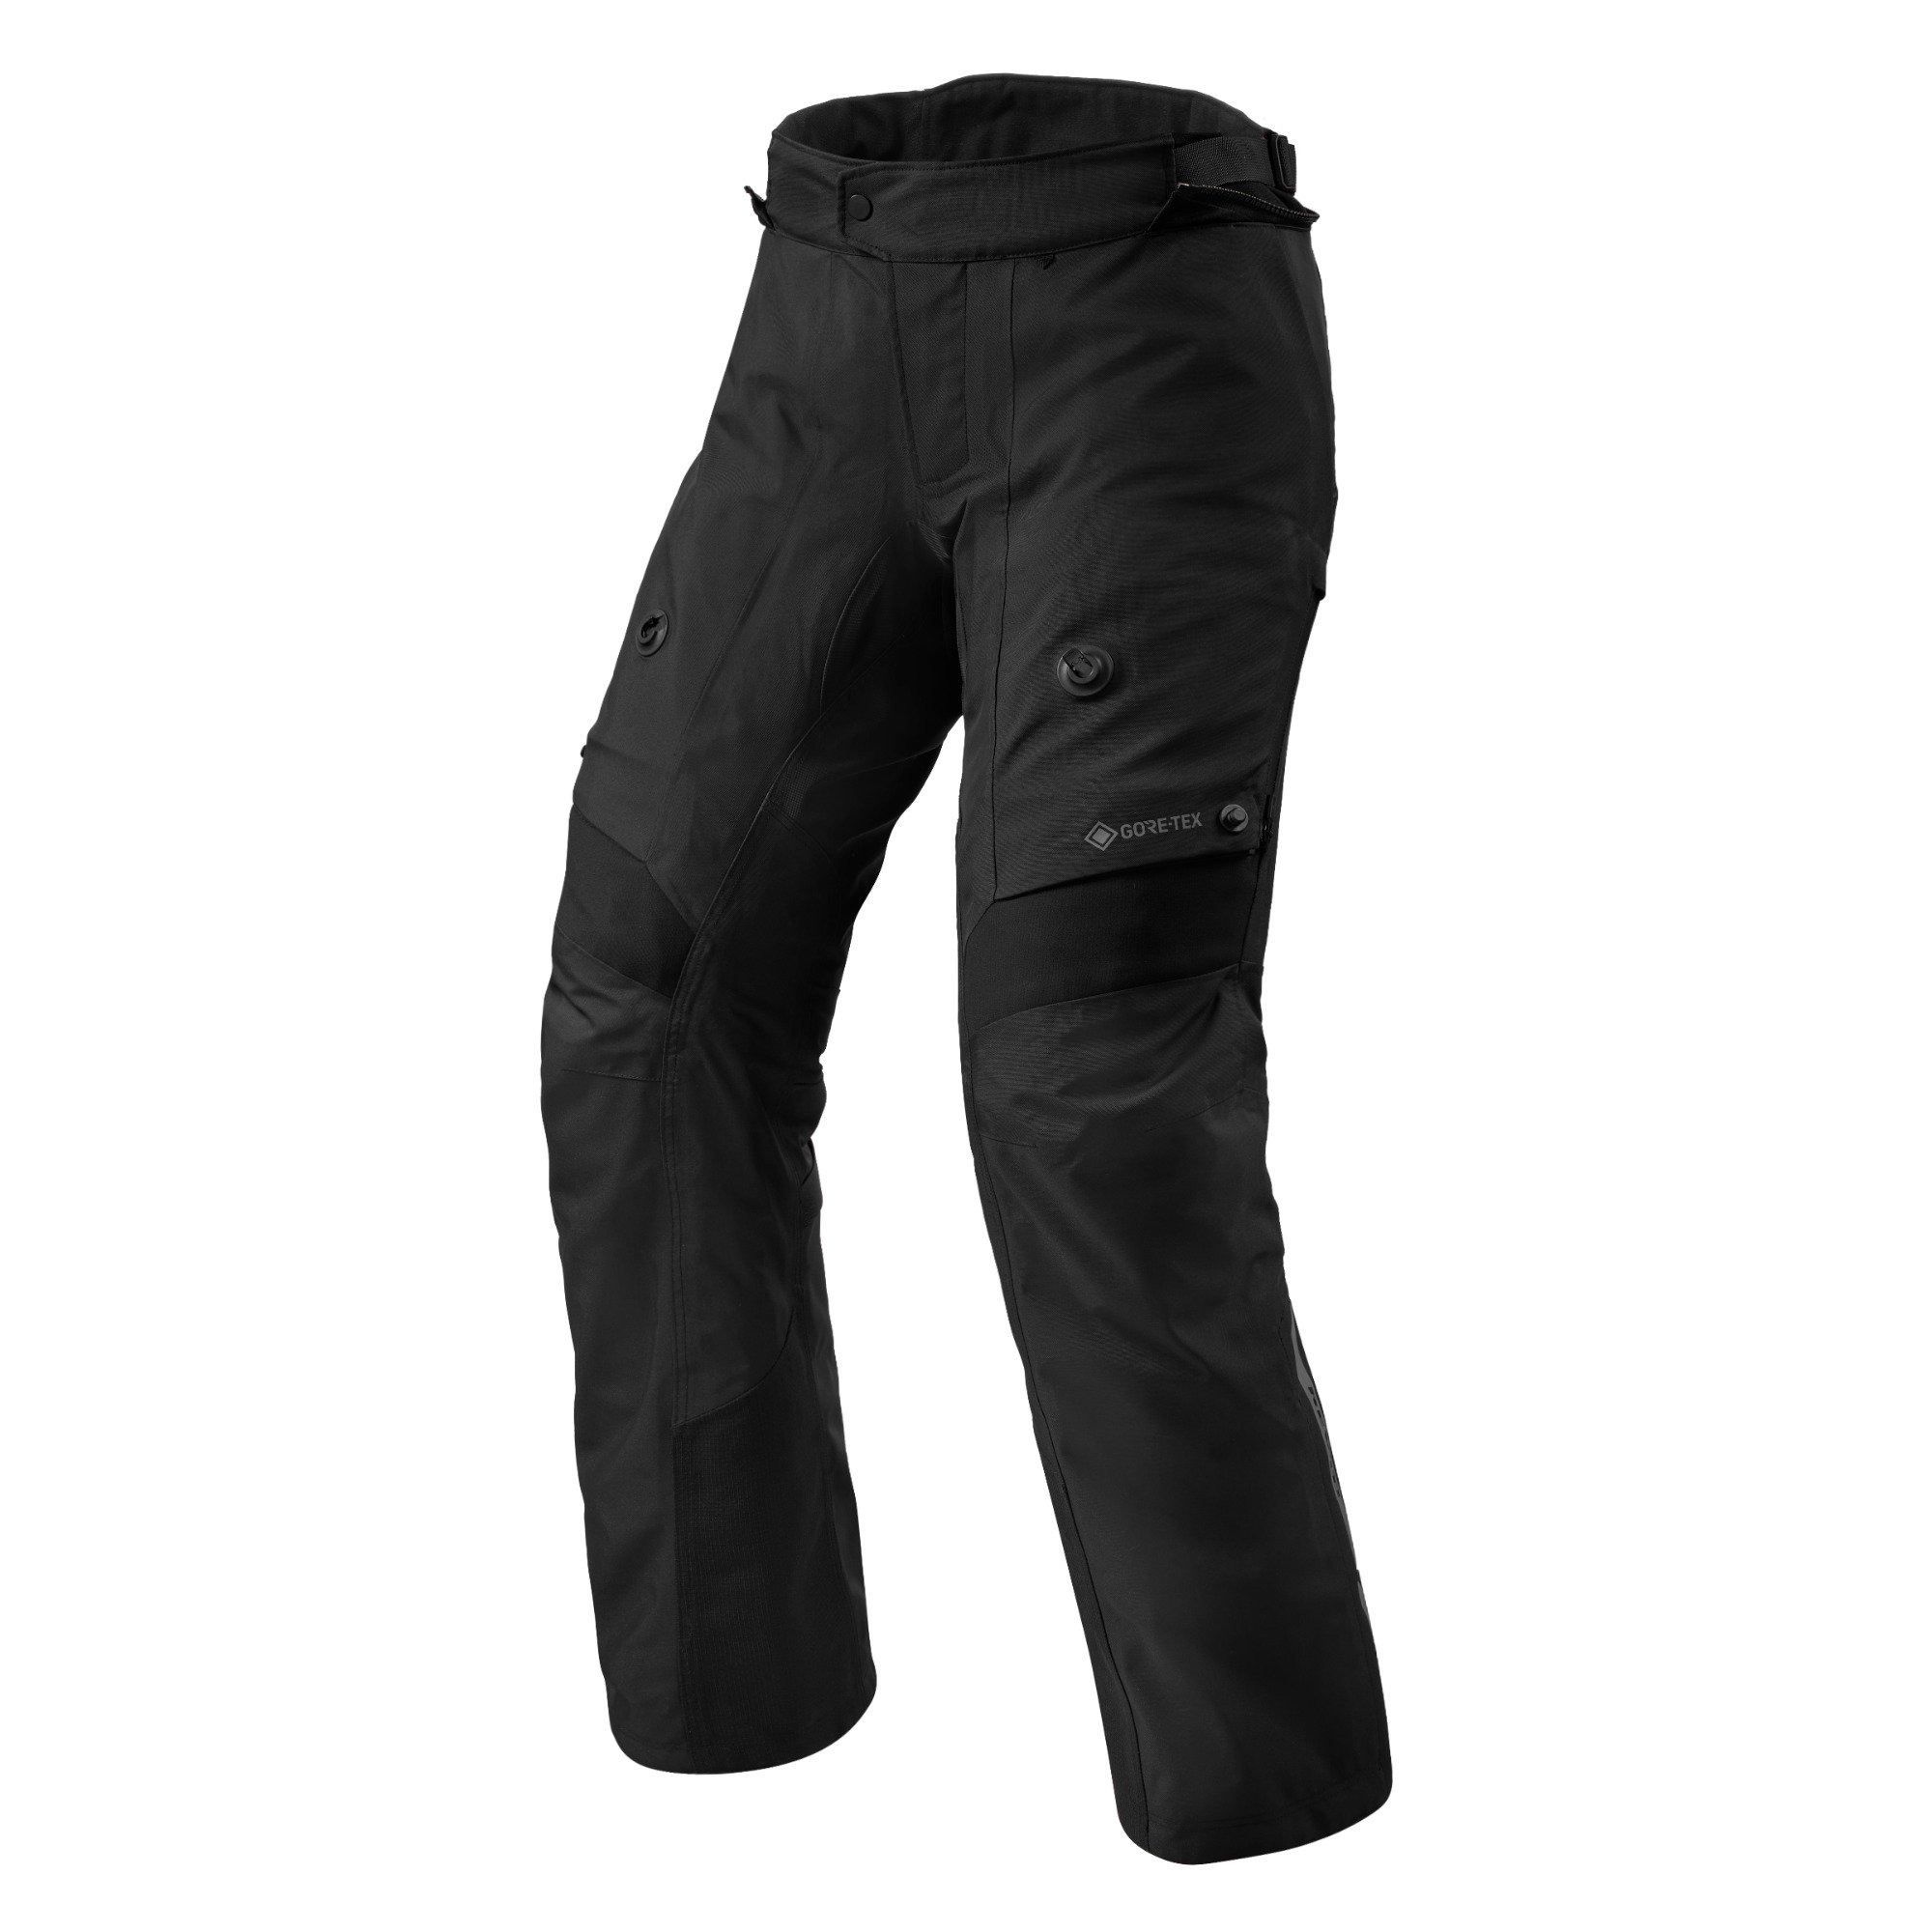 Image of REV'IT! Pants Poseidon 3 GTX Black Standard Motorcycle Pants Size 3XL EN